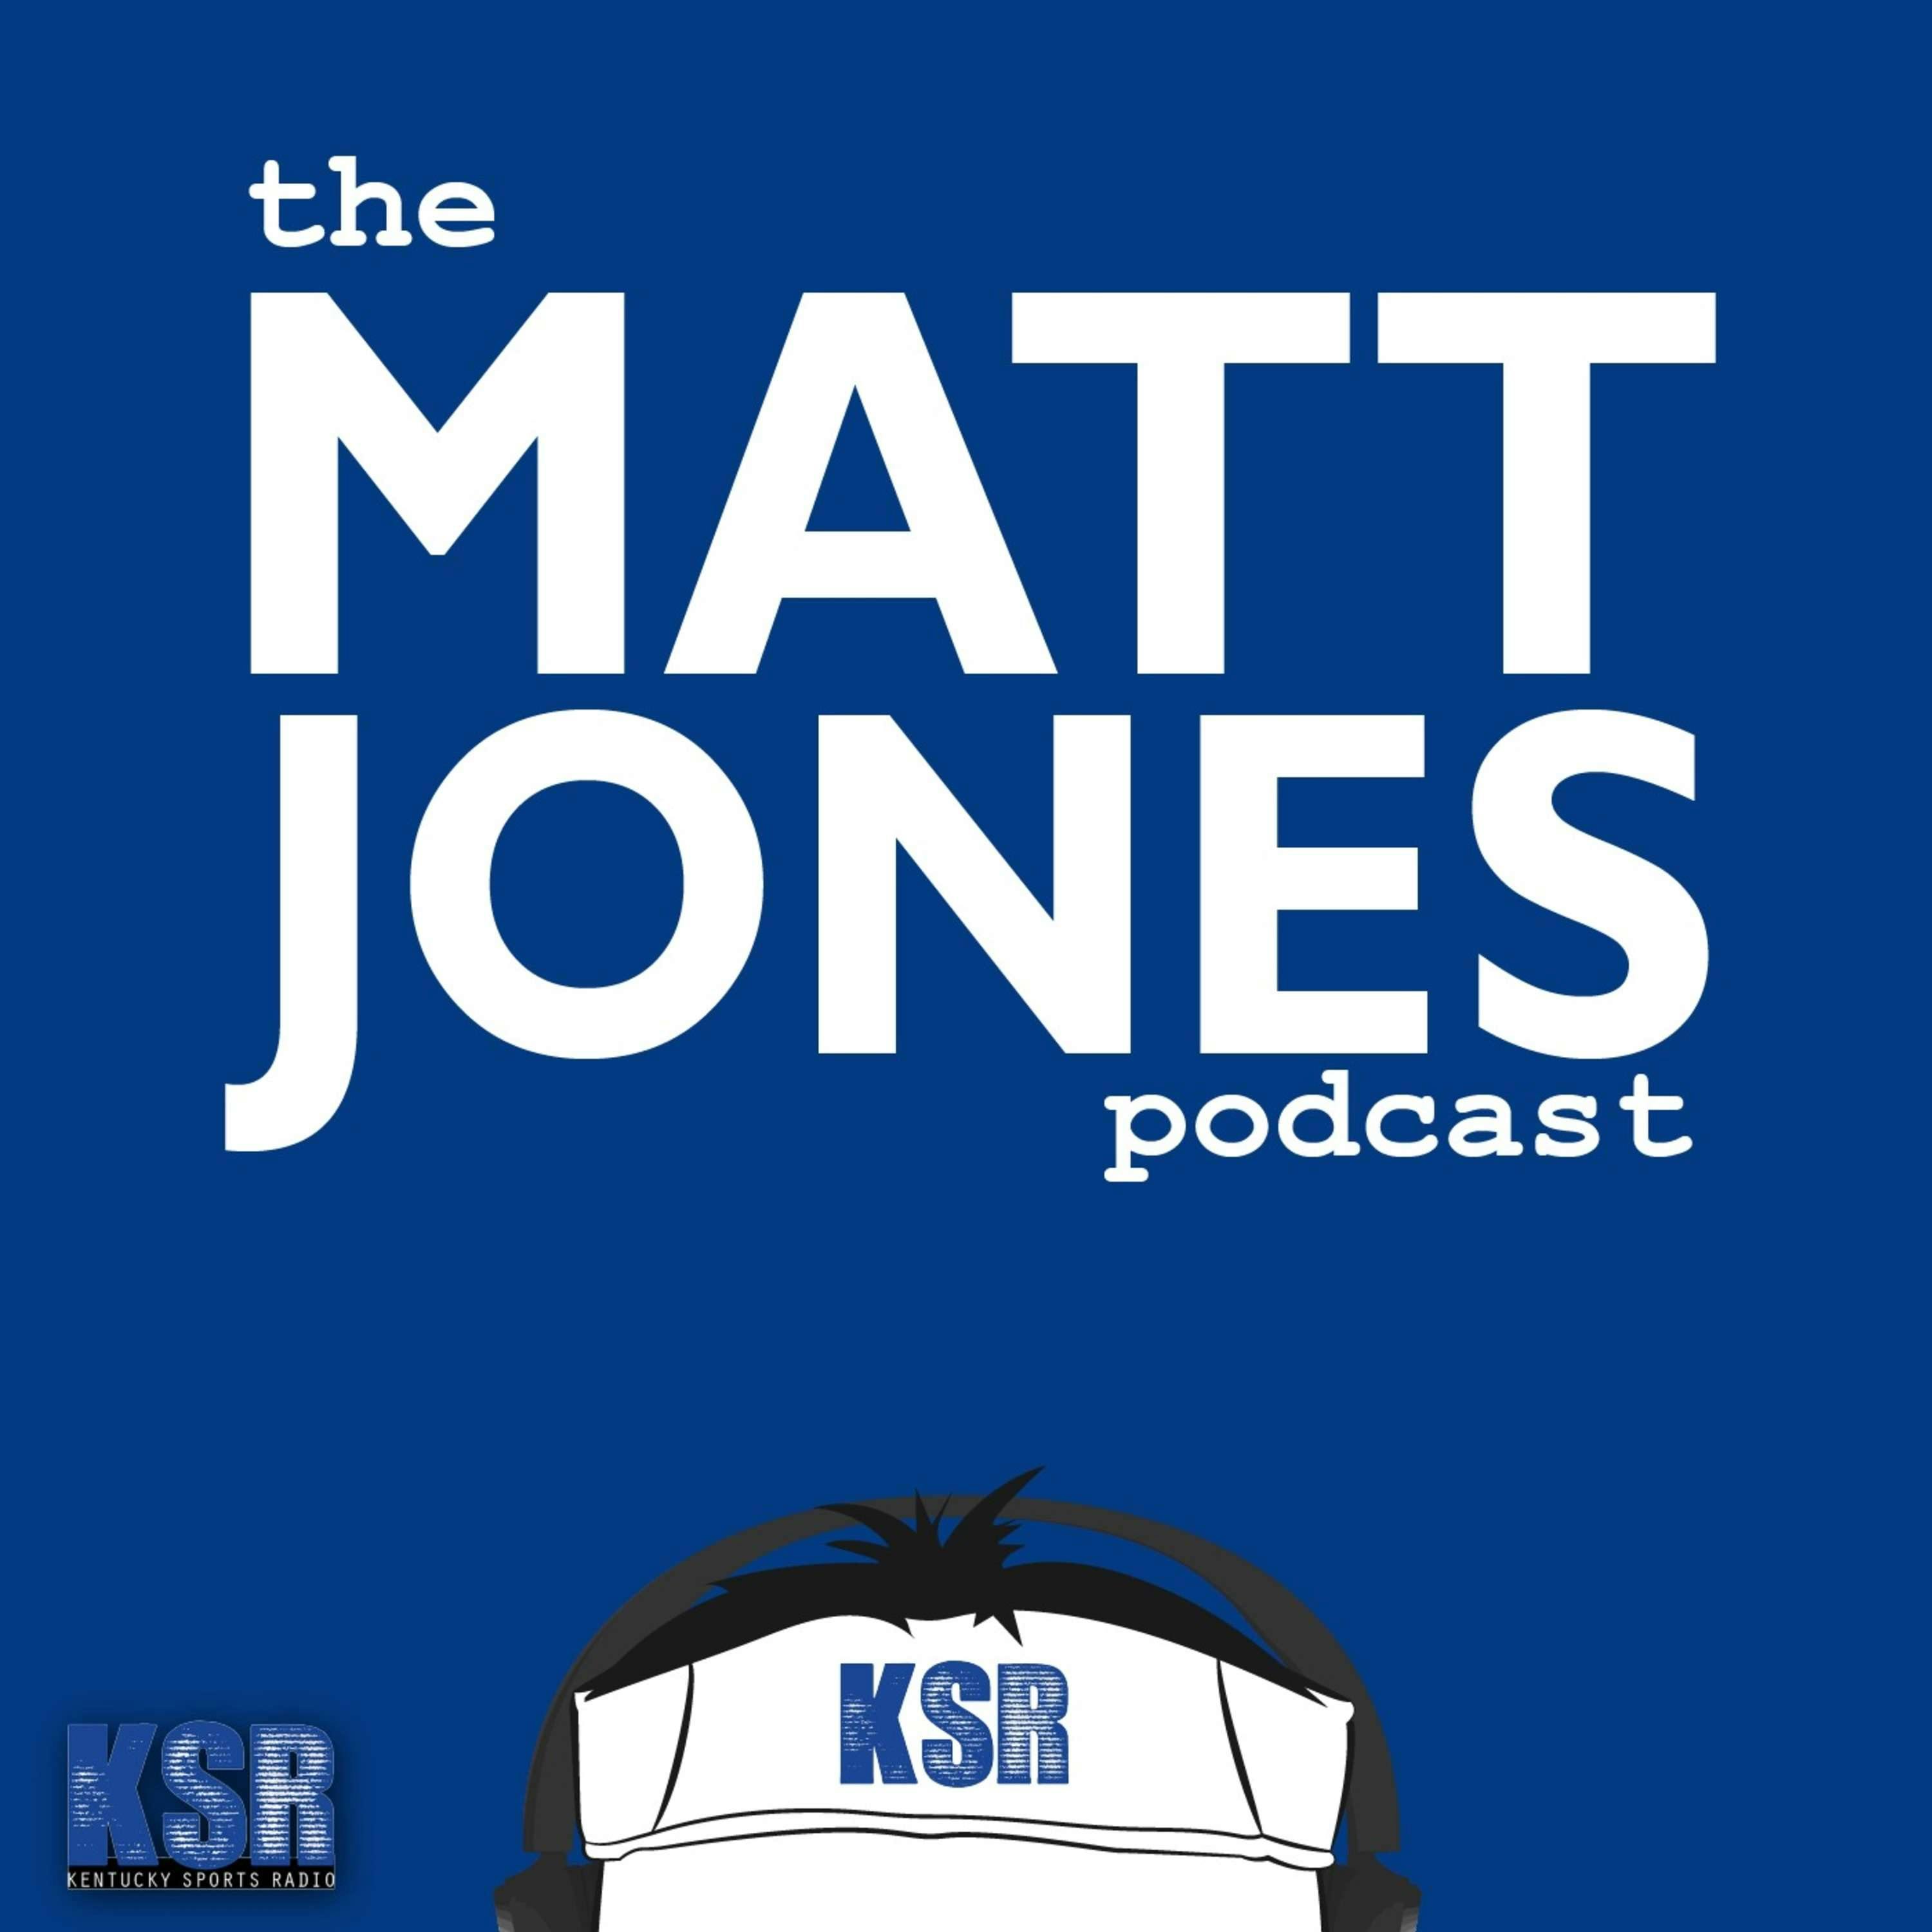 The Matt Jones Podcast: E46 NBA Draft with Fran Fraschilla & Chad Ford